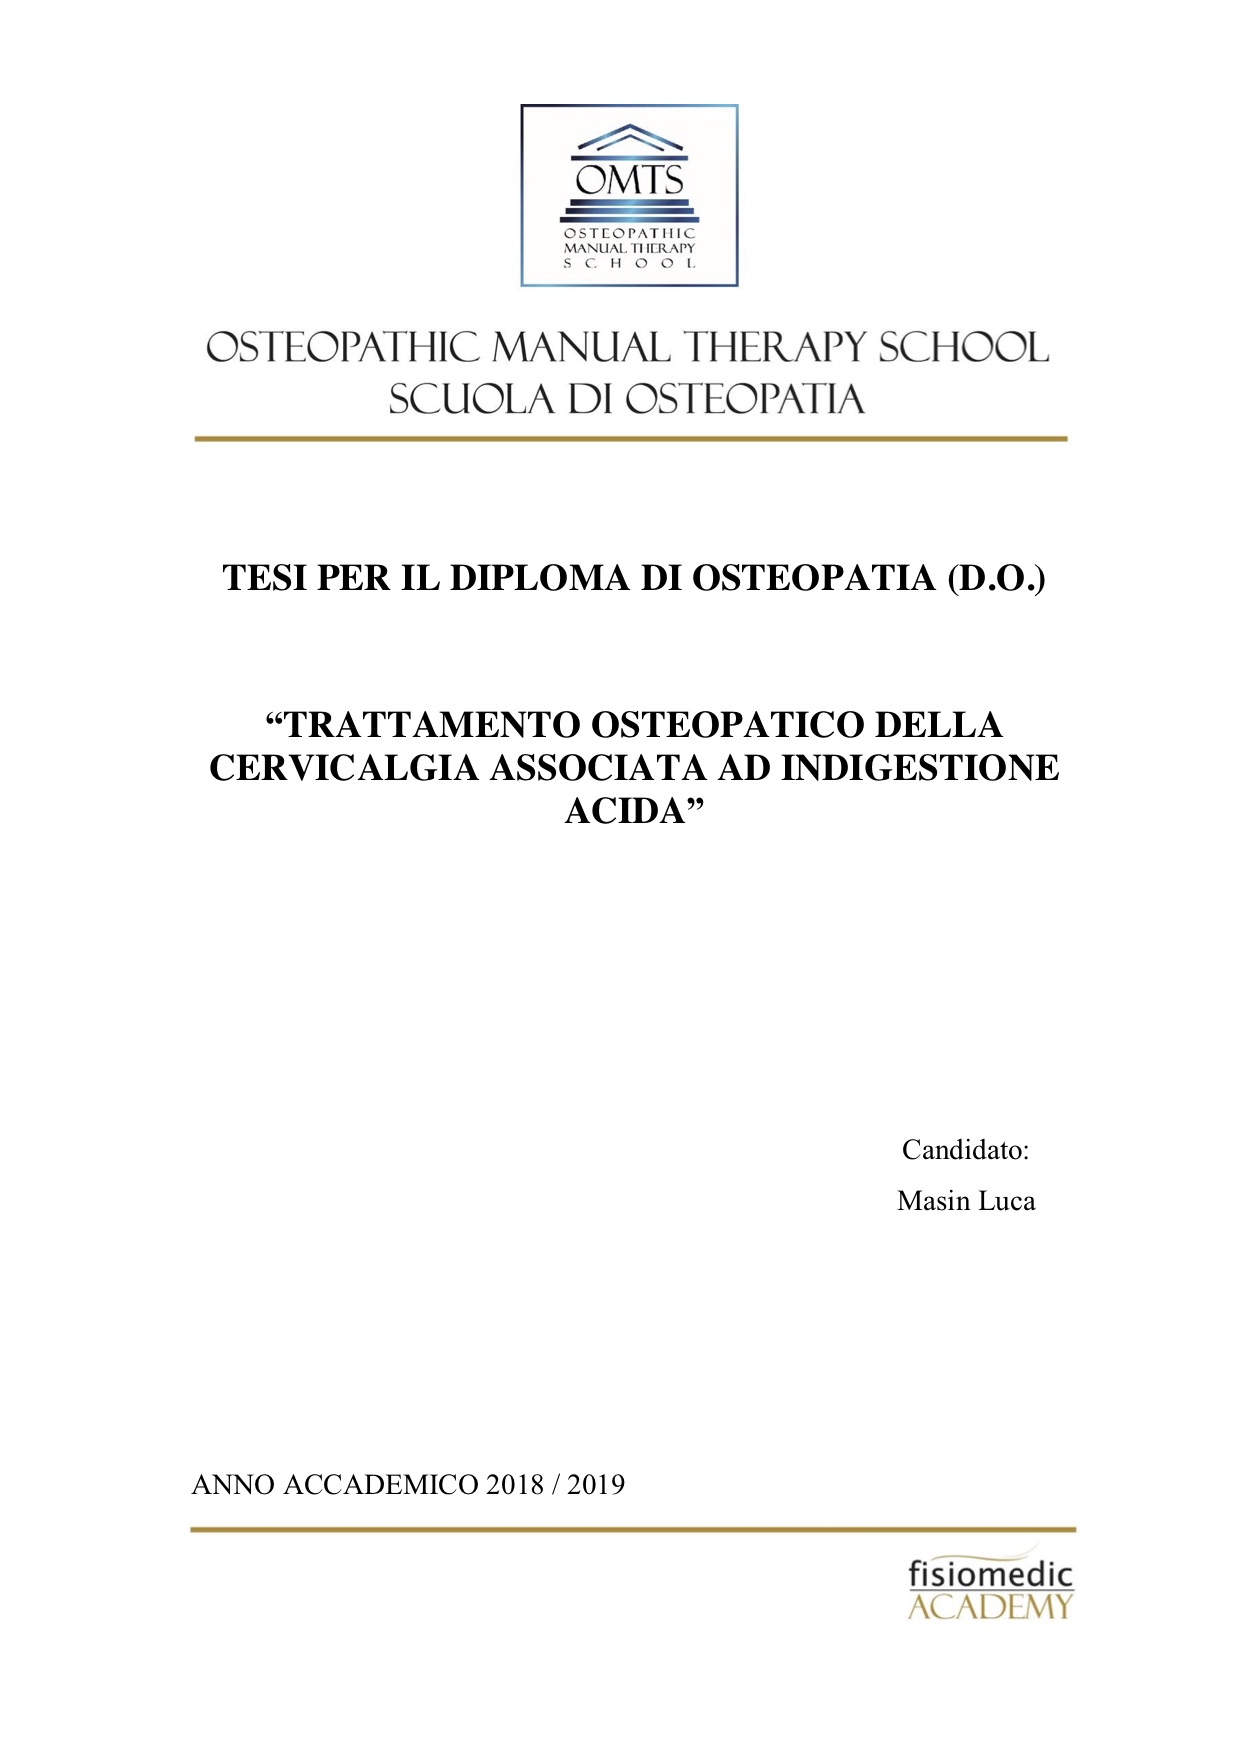 Luca Masin Tesi Diploma Osteopatia 2018